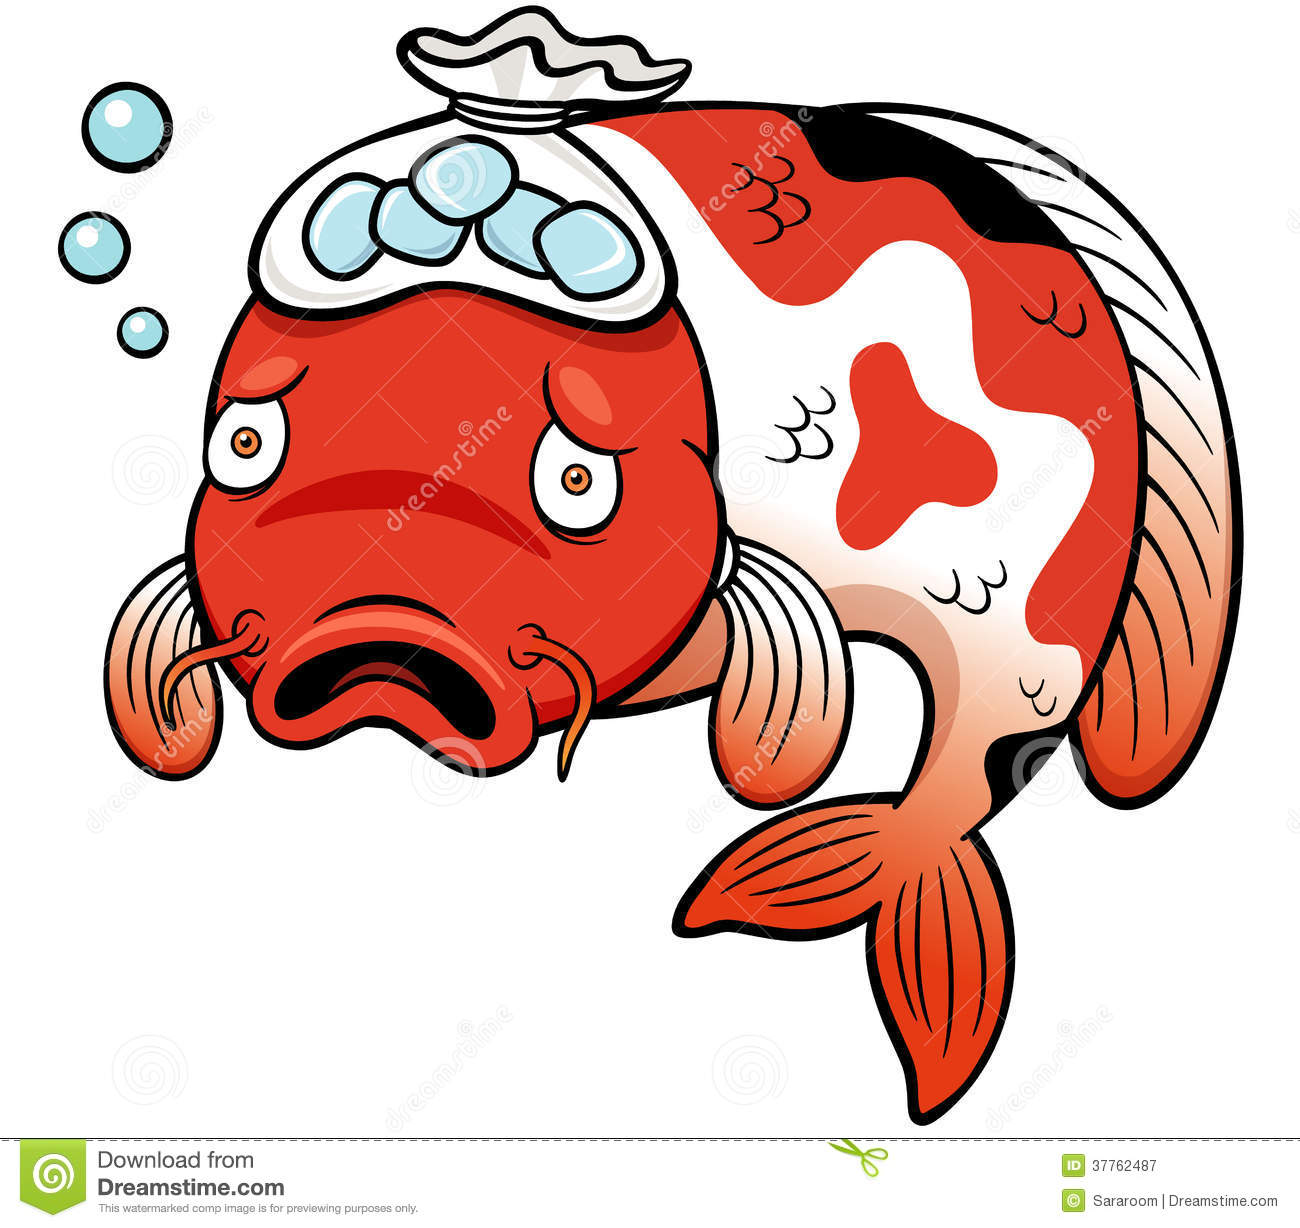 Fish Sick Cartoon Royalty Free Stock Photography   Image  37762487